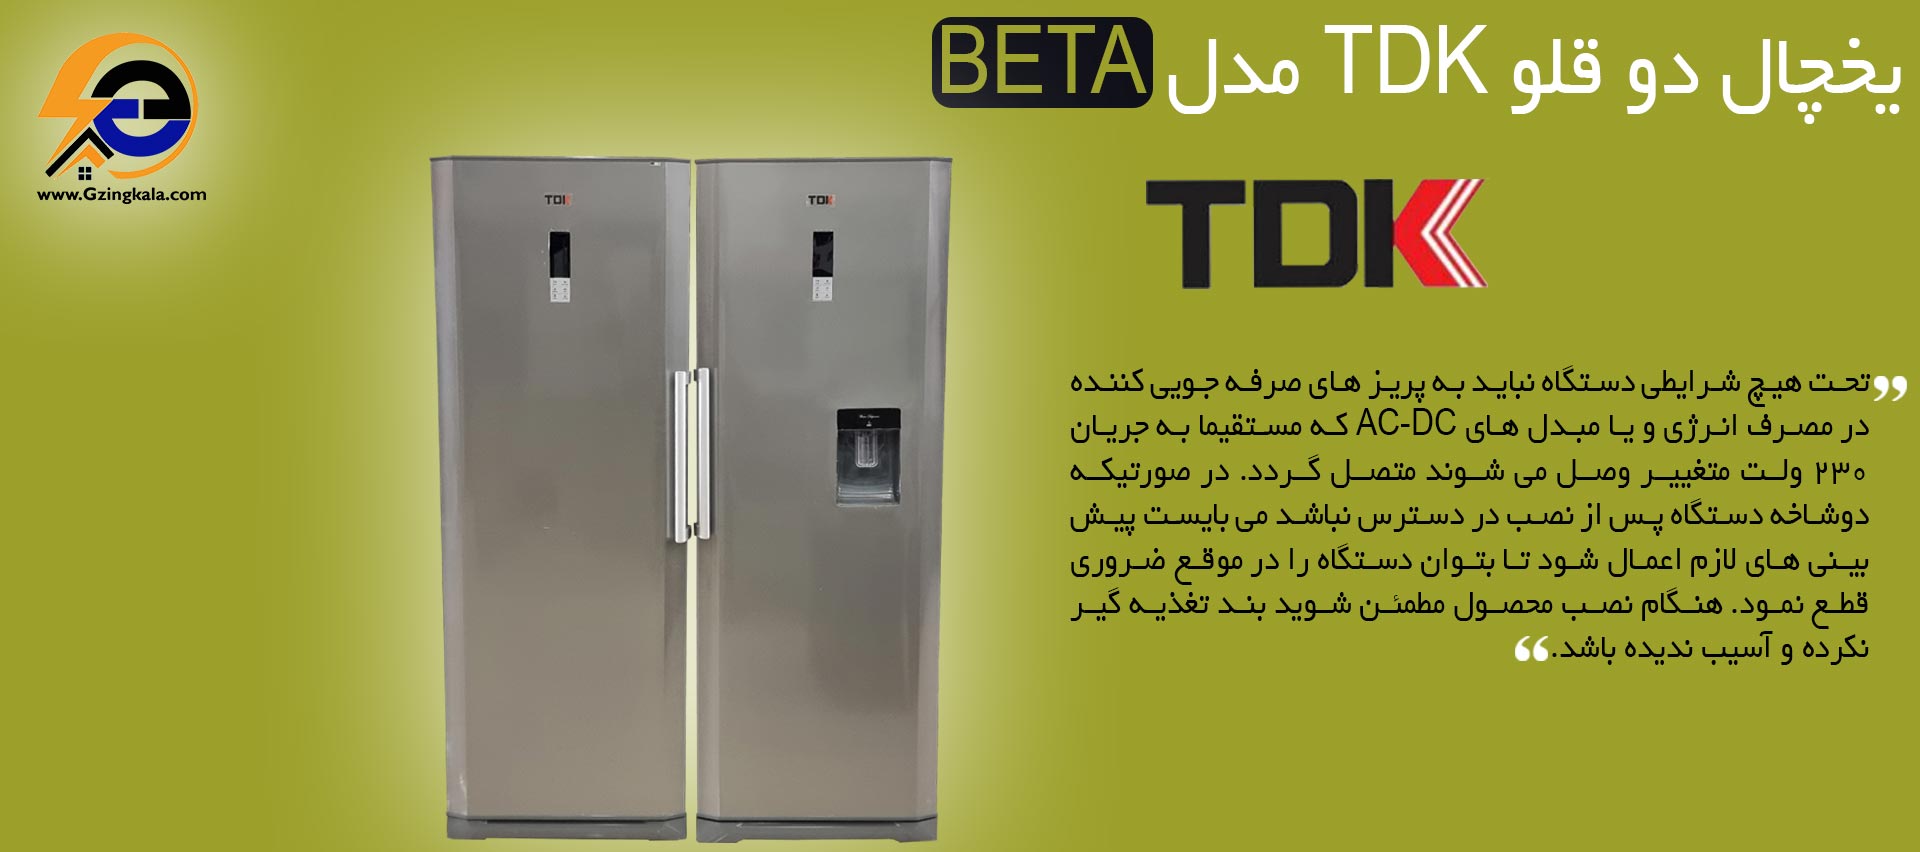 یخچال دو قلو TDK مدل BETA